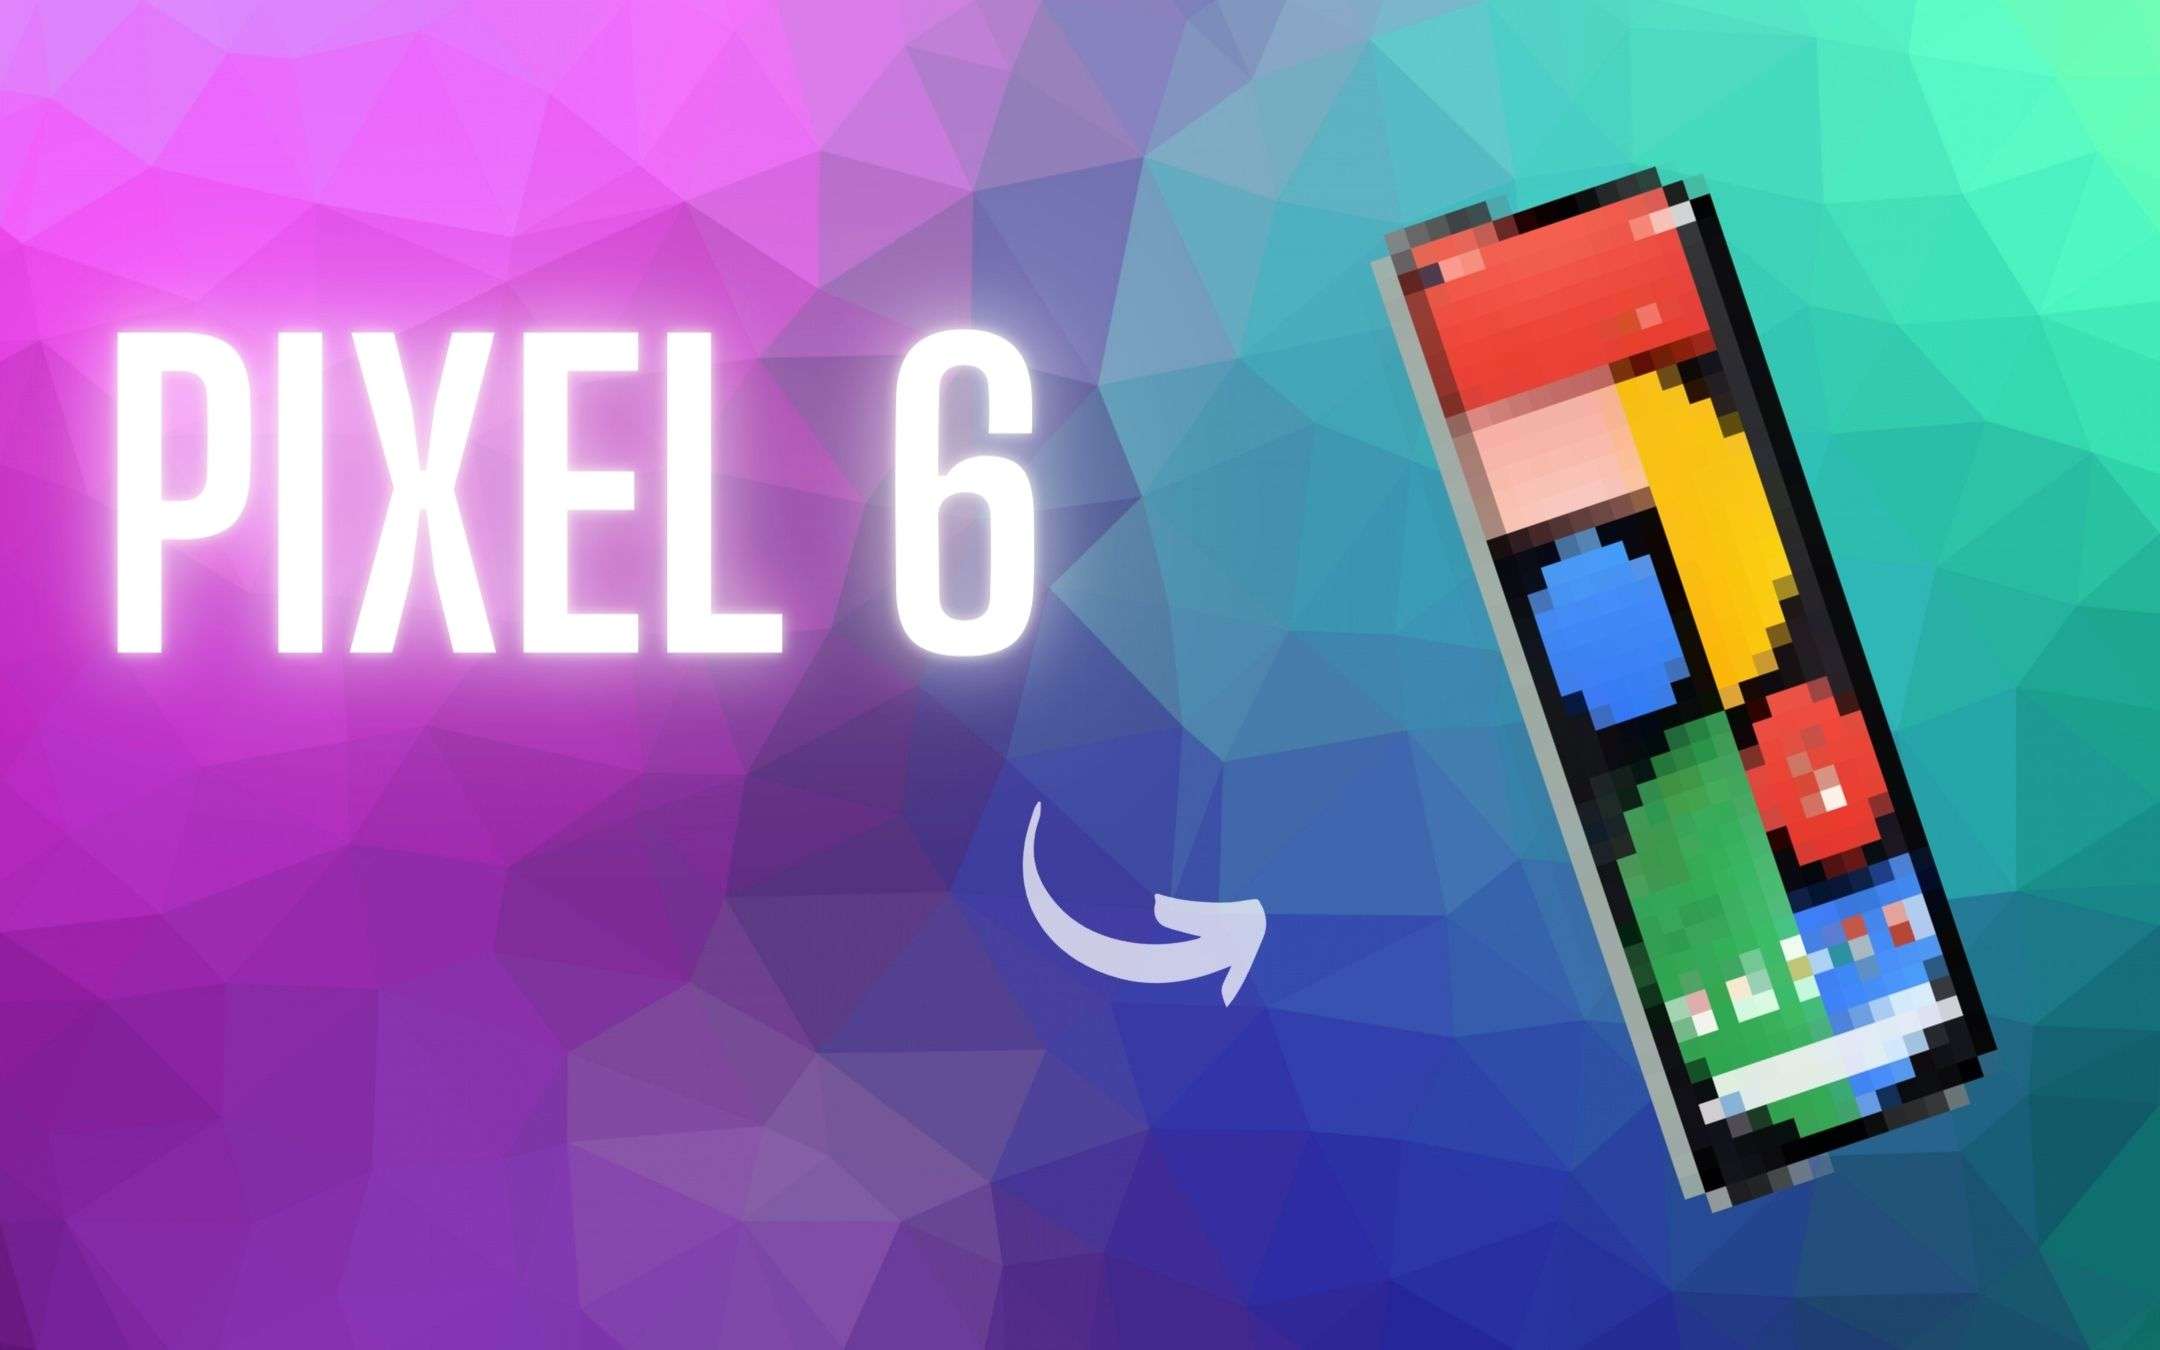 Google Pixel 6 come iPhone 12? Più o meno!